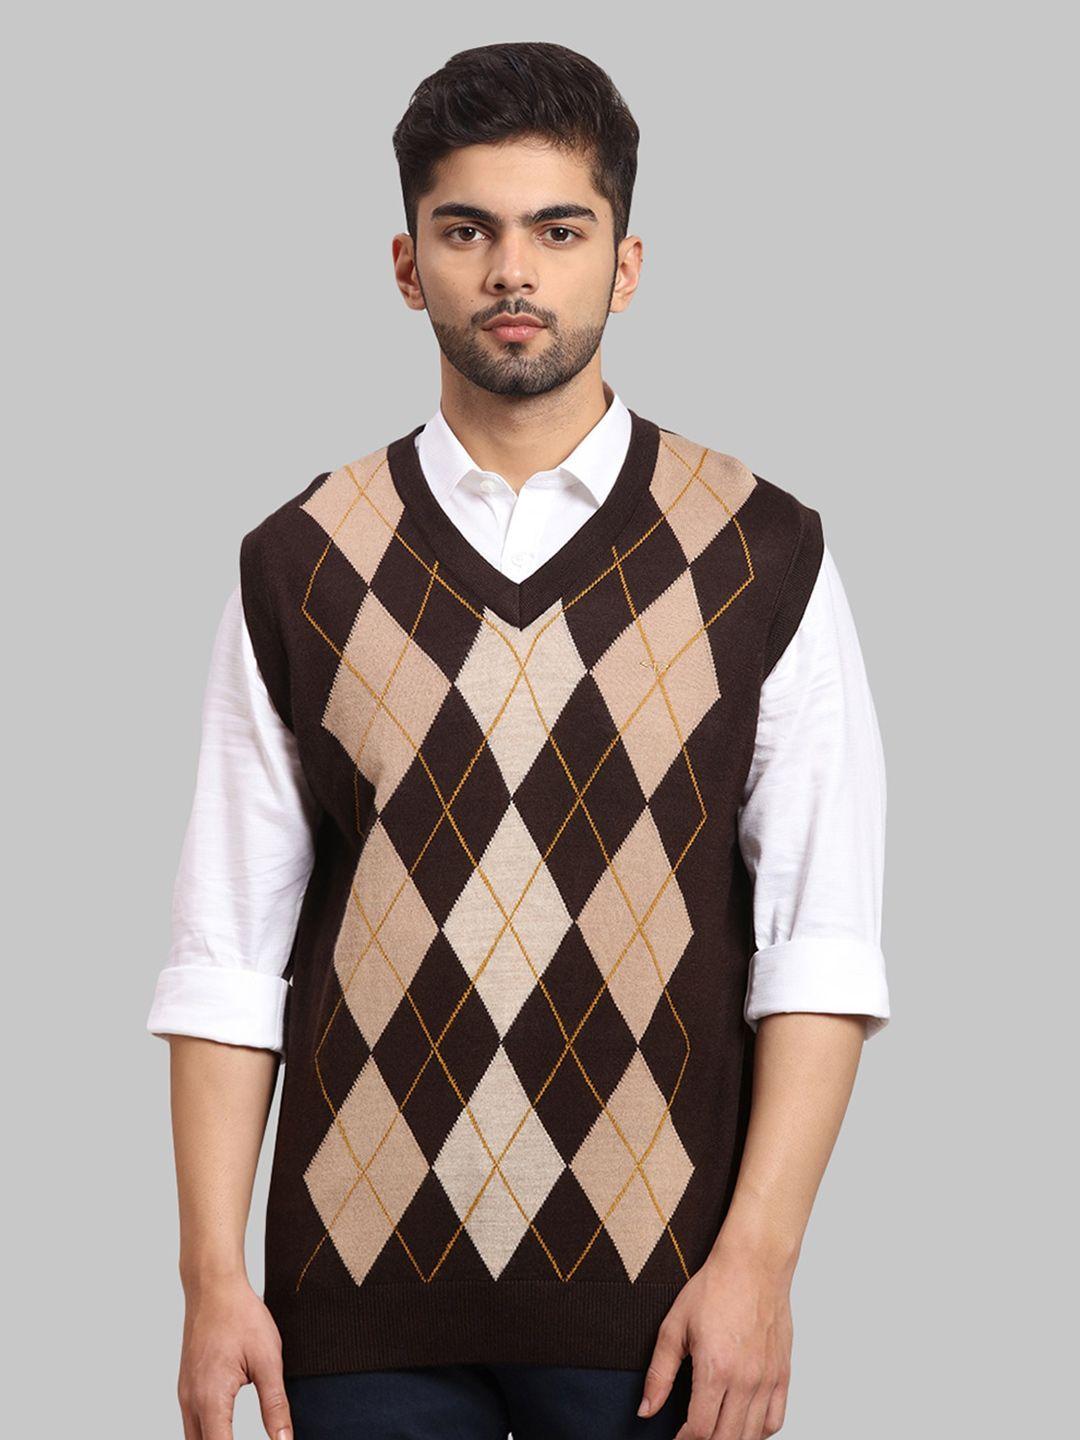 colorplus-men-brown-&-cream-coloured-printed-sweater-vest